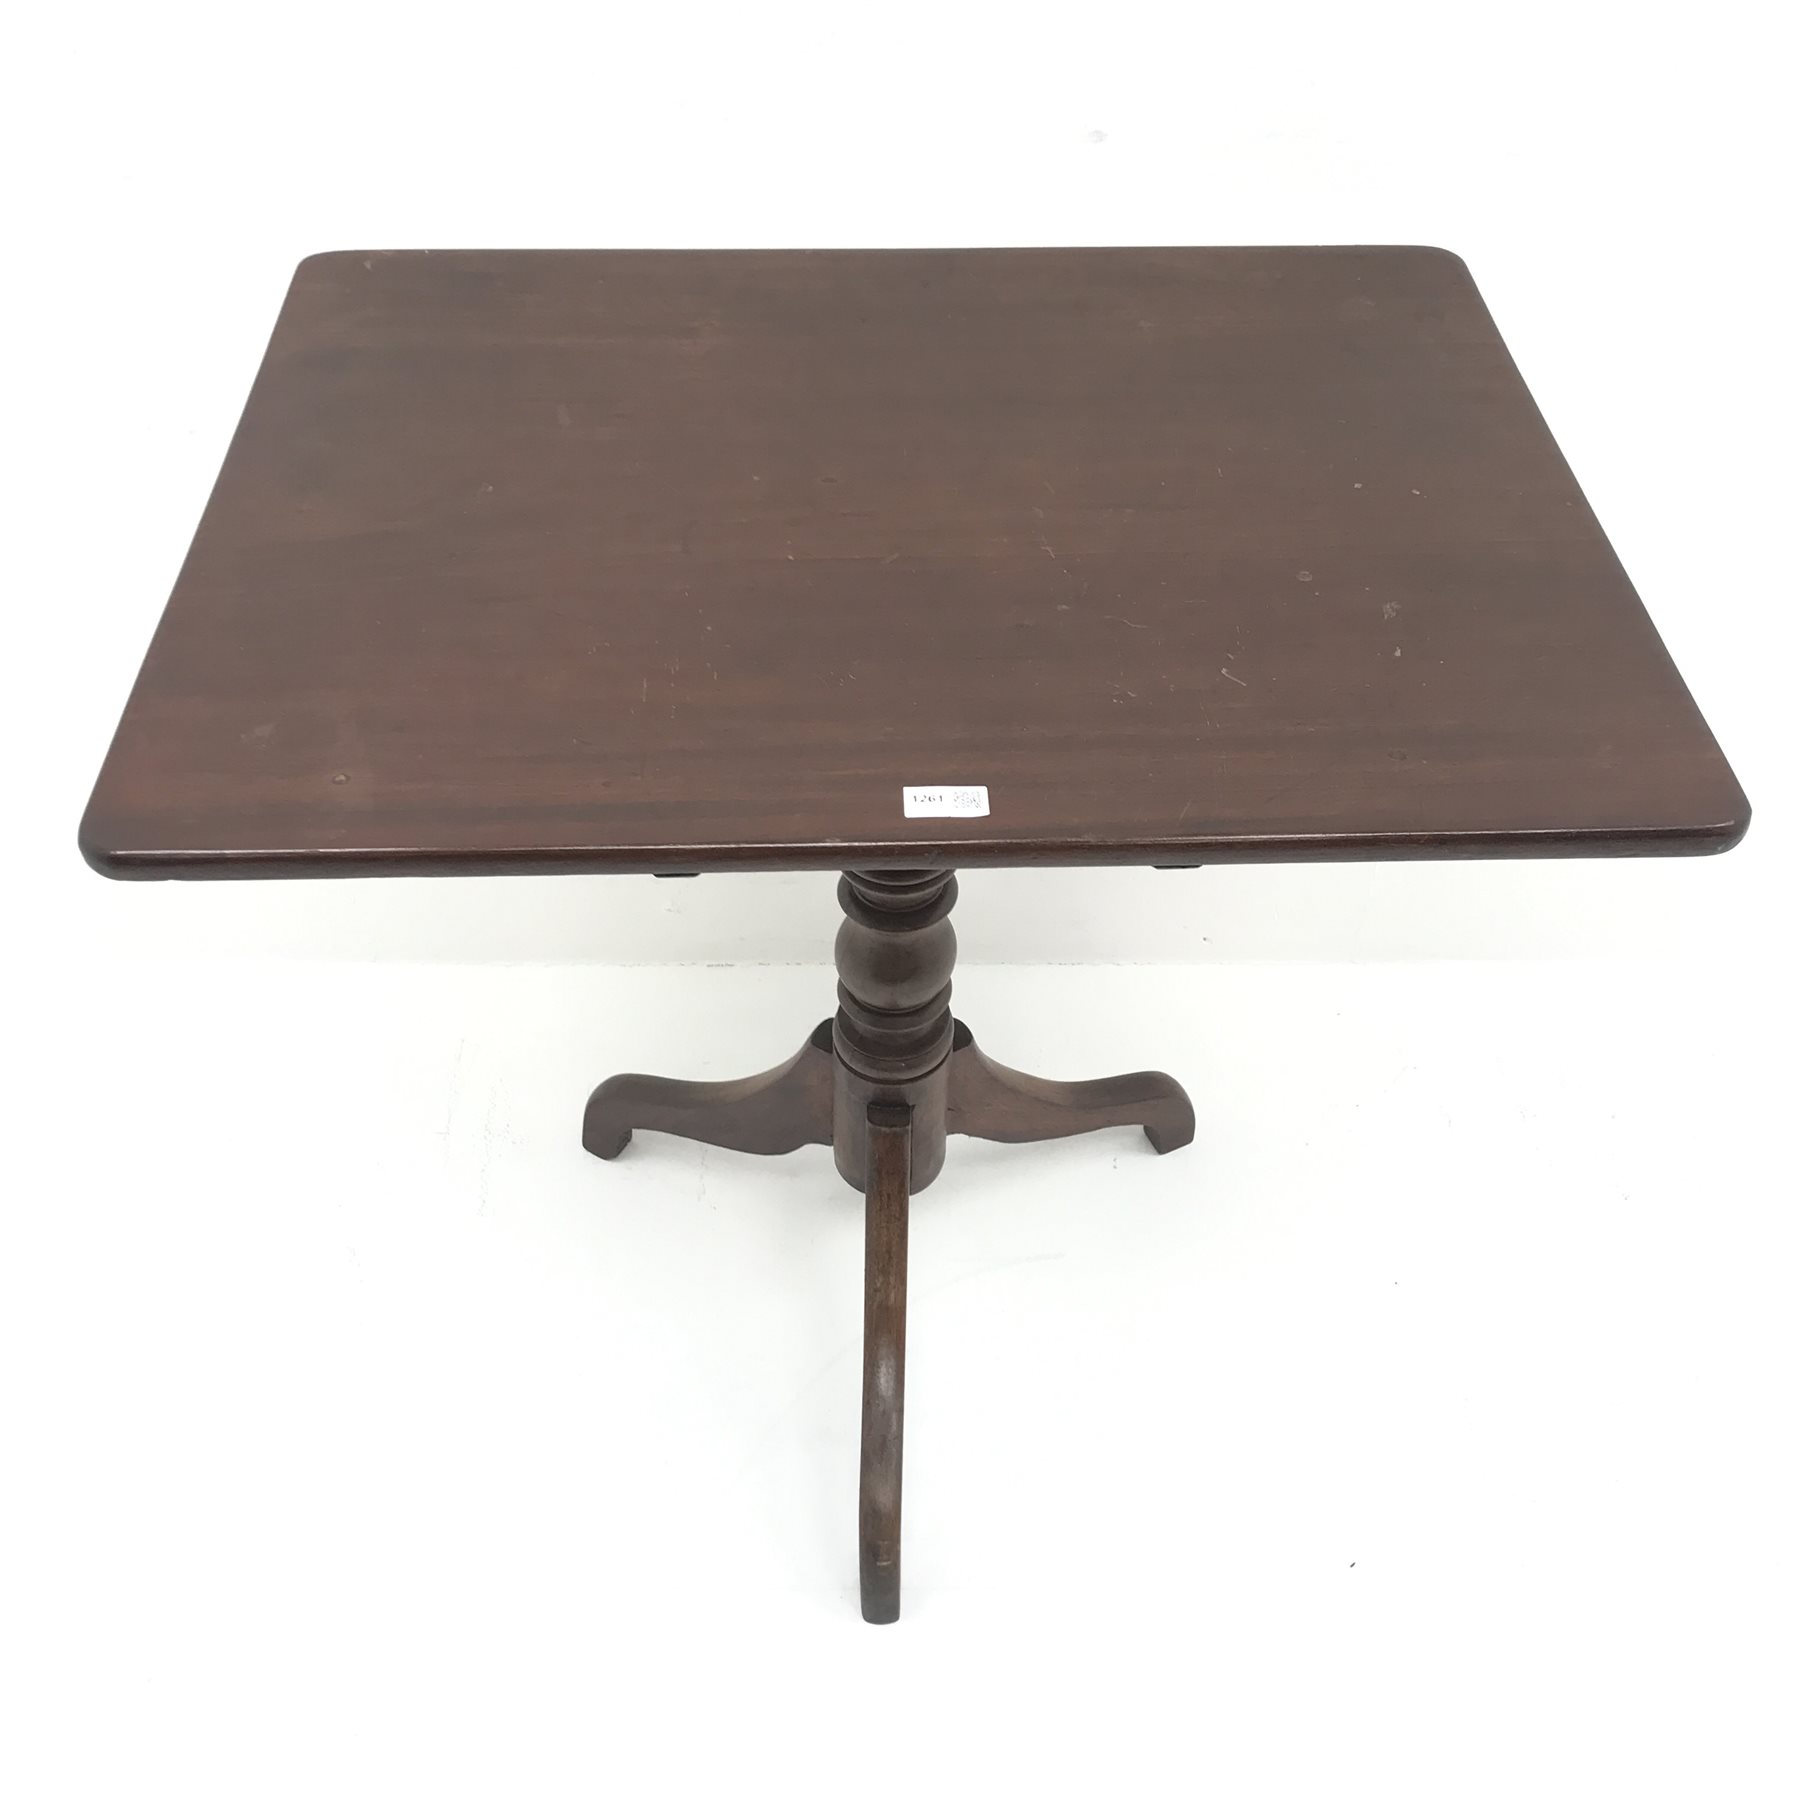 19th century mahogany tilt top table, single turned column on tripod base, W75cm, H71cm, D85cm - Image 3 of 6